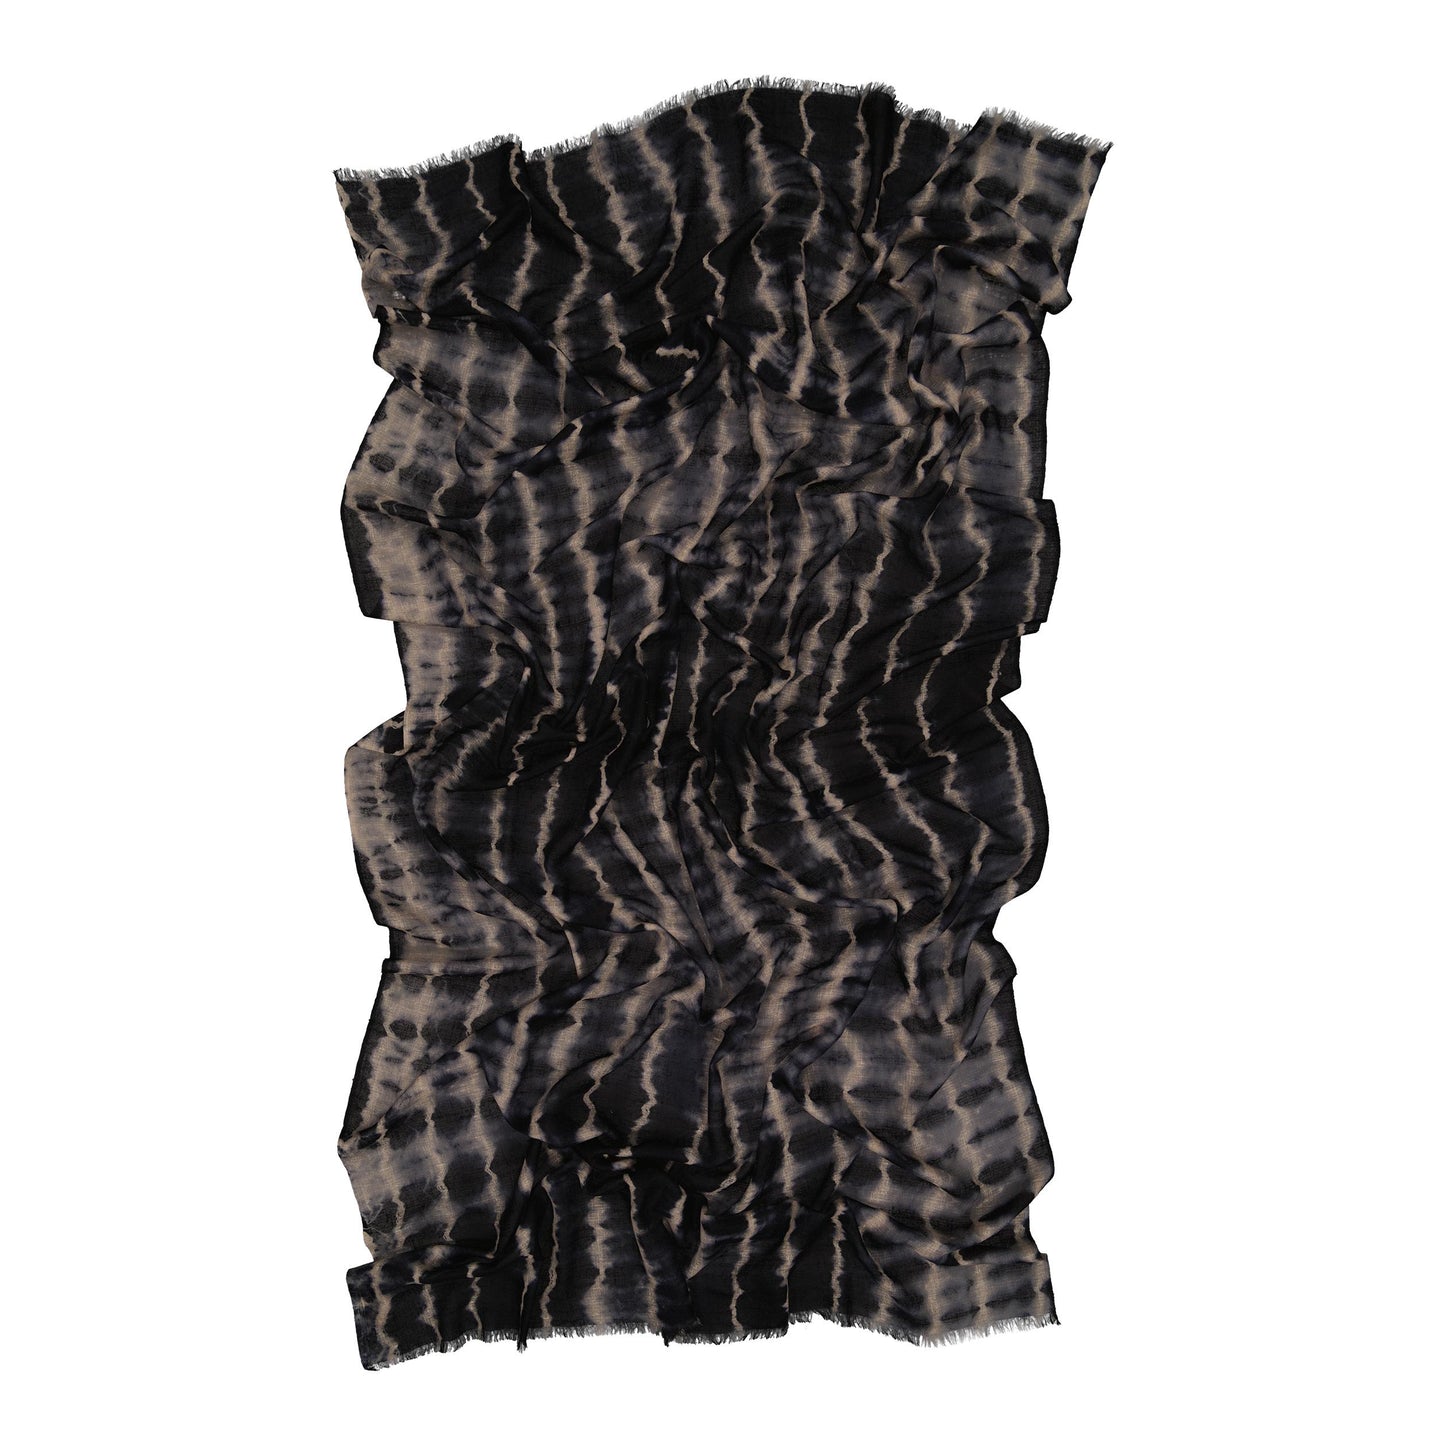 RIVE - shibori cashmere shawl BLACK